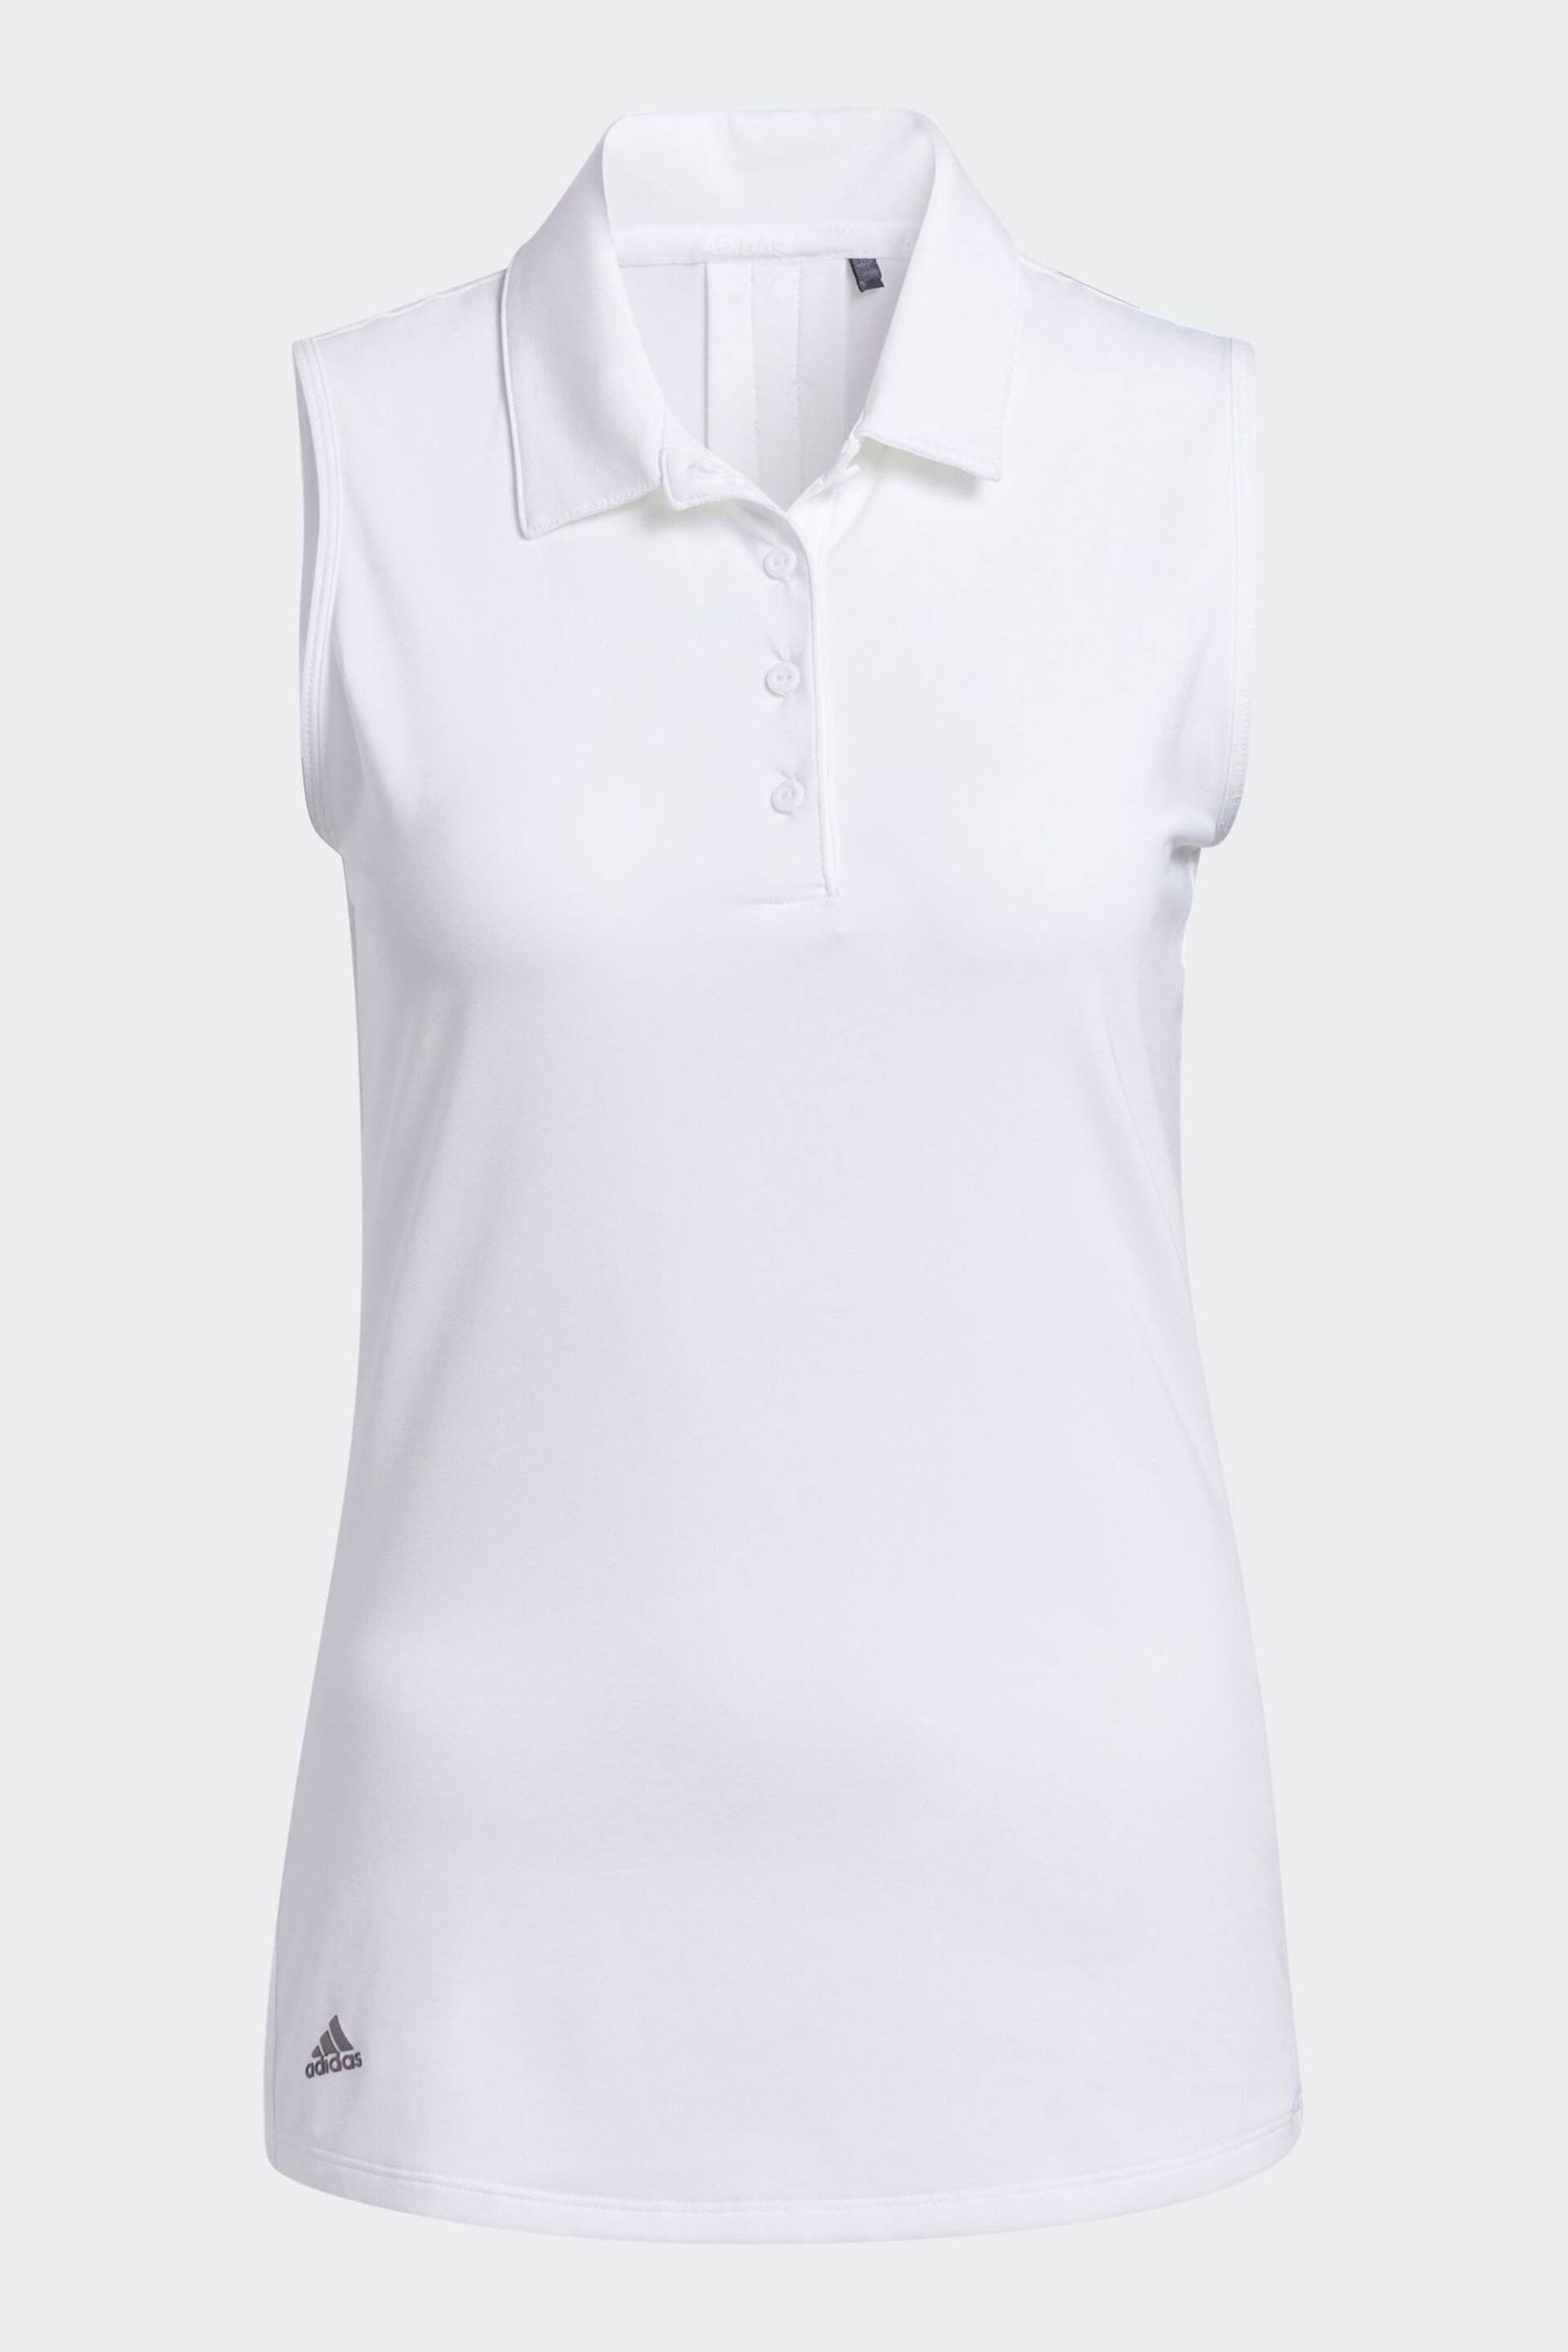 adidas Golf Ultimate 365 Solid Sleeveless Polo Shirt - Image 1 of 1